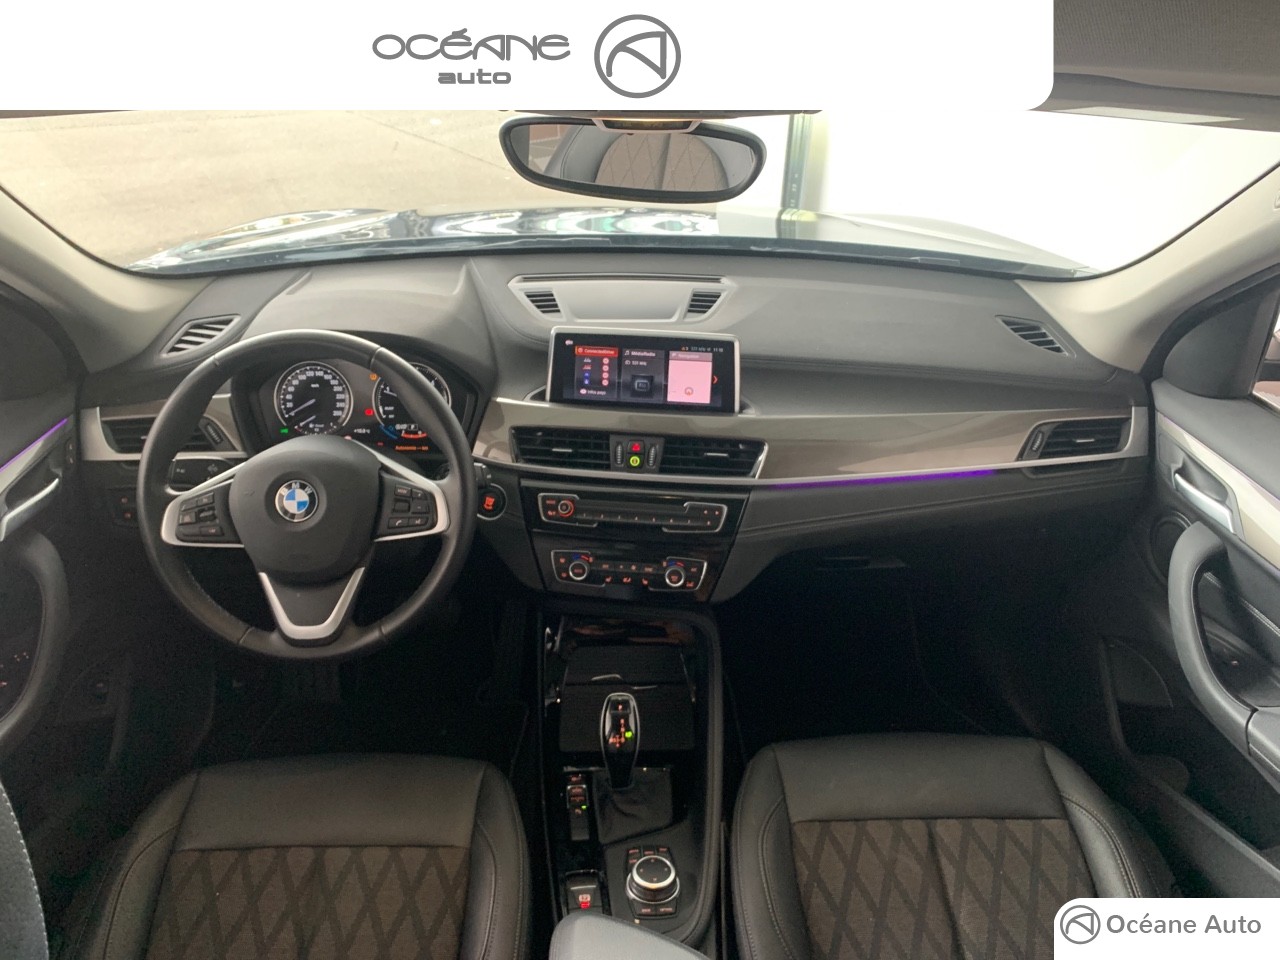 BMW X1 sDrive 18d 150 ch BVA8 xLine - Véhicule Occasion Océane Auto